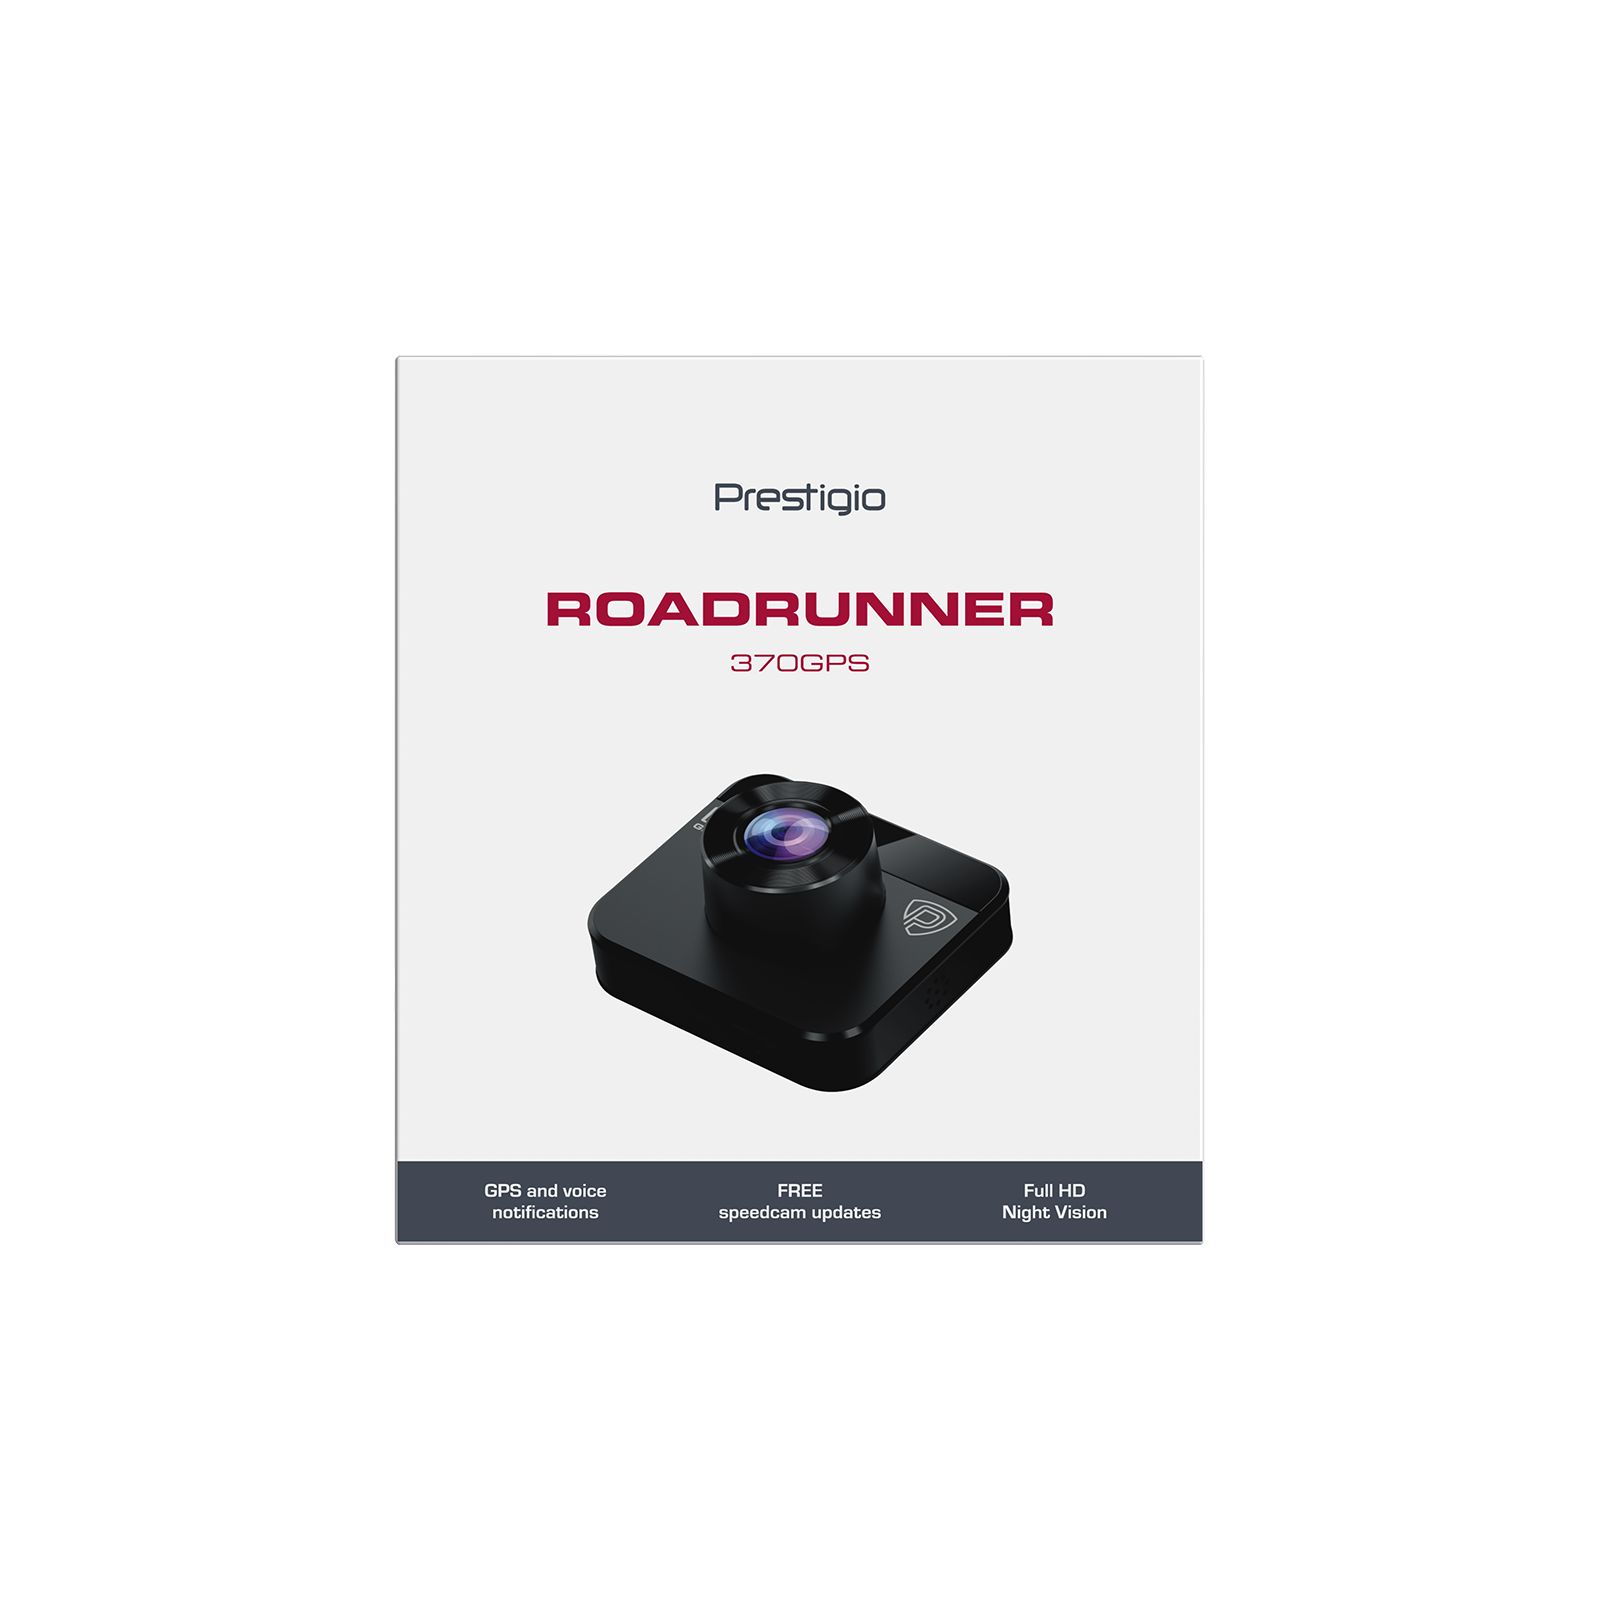 Prestigio RoadRunner 370GPS, 2.0'' IPS (320x240) display, FHD 1920x1080@30fps, HD 1280x720@30fps, AIT8336N, 2 MP CMOS GC2053 image sensor, 2 MP camera, 140° Viewing Angle, Micro USB, 120 mAh battery, GPS, Night Vision, Motion Detection, G-sensor, Cyclic Recording, color/black, plastic case_1